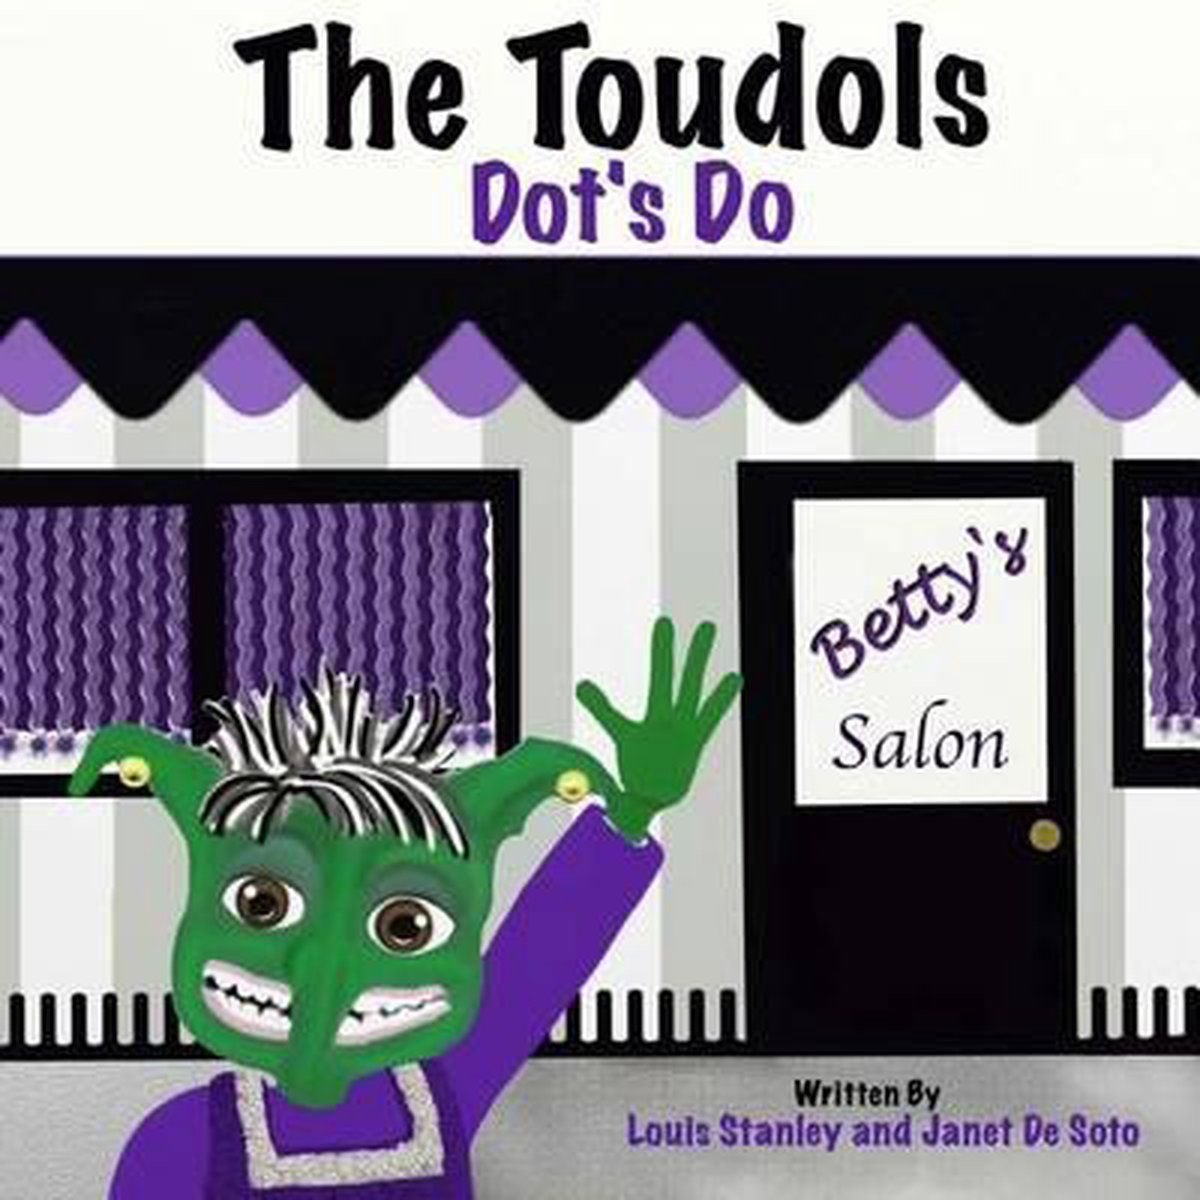 The Toudols - Louis Stanley